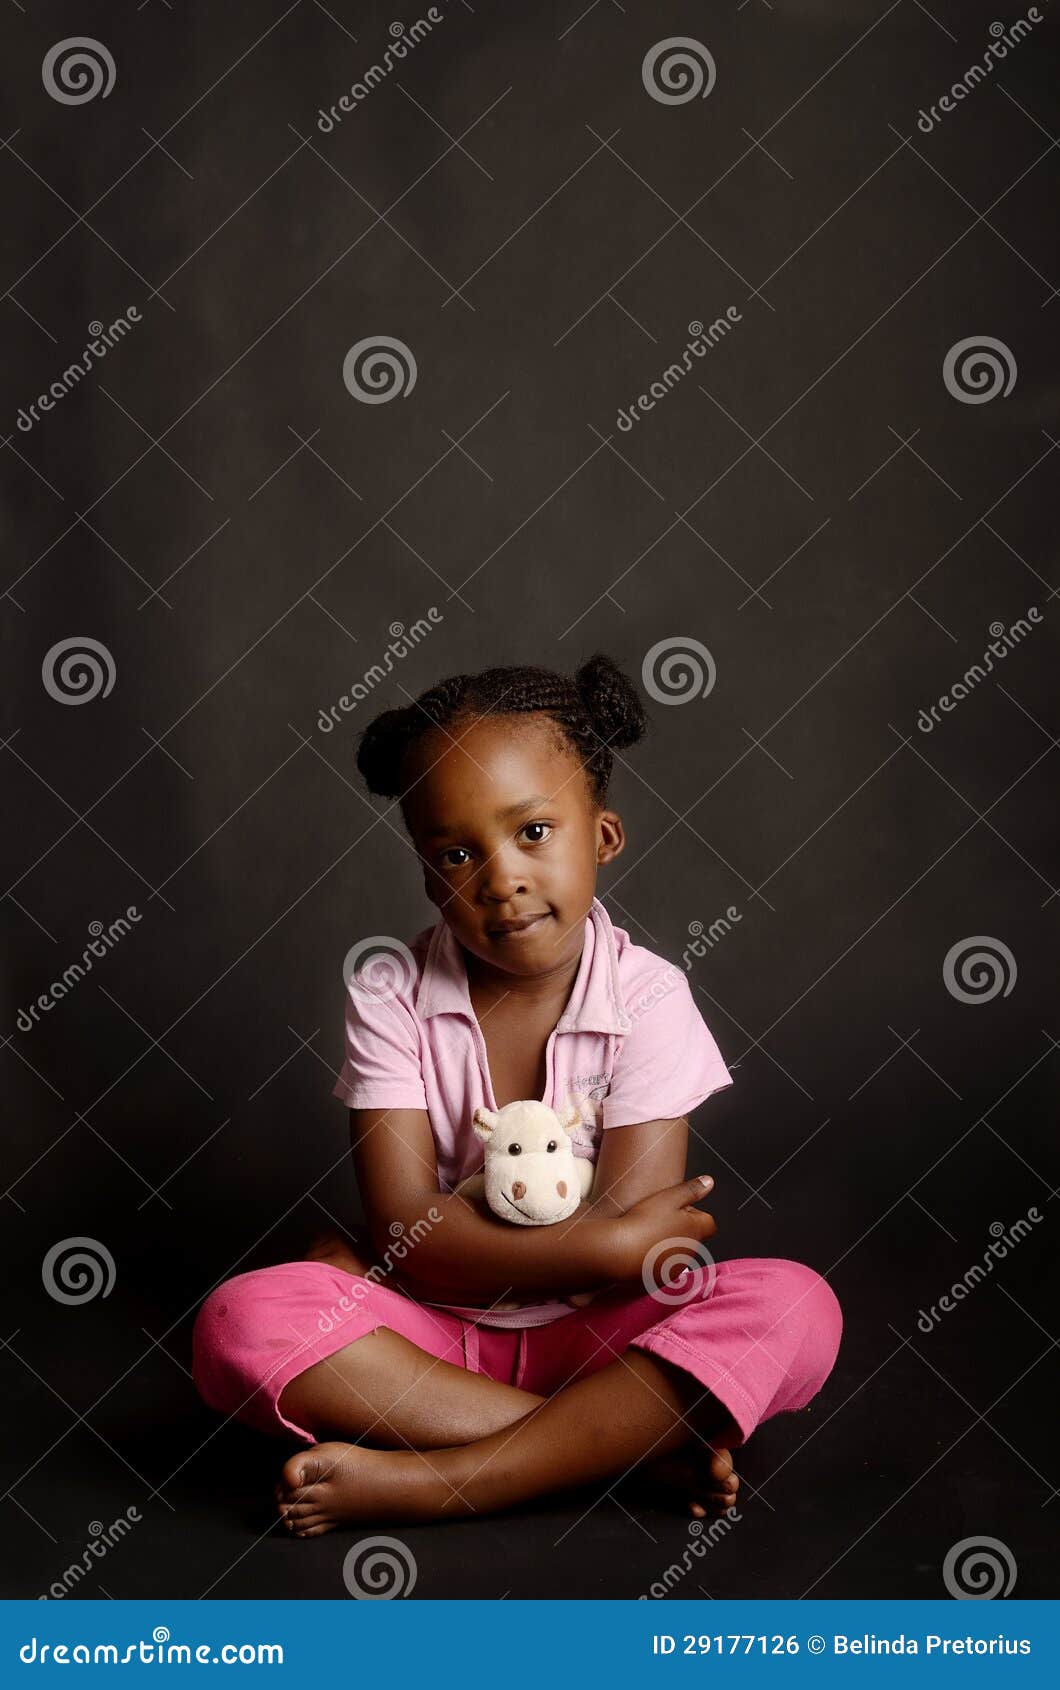 sad little girl sitting alone